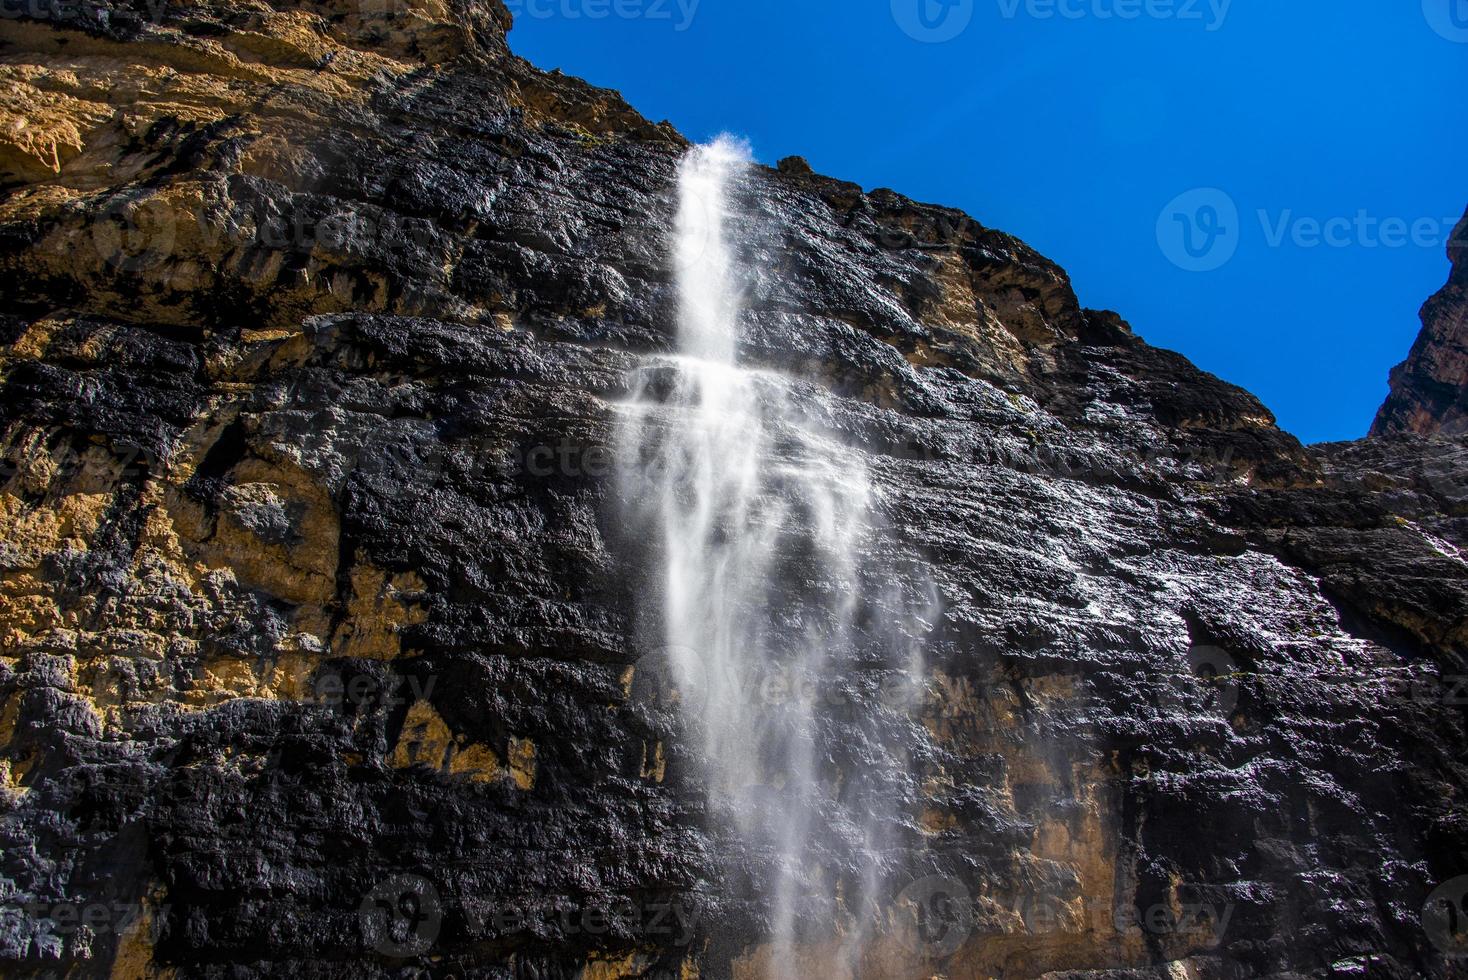 Val Travenanzes waterfalls photo